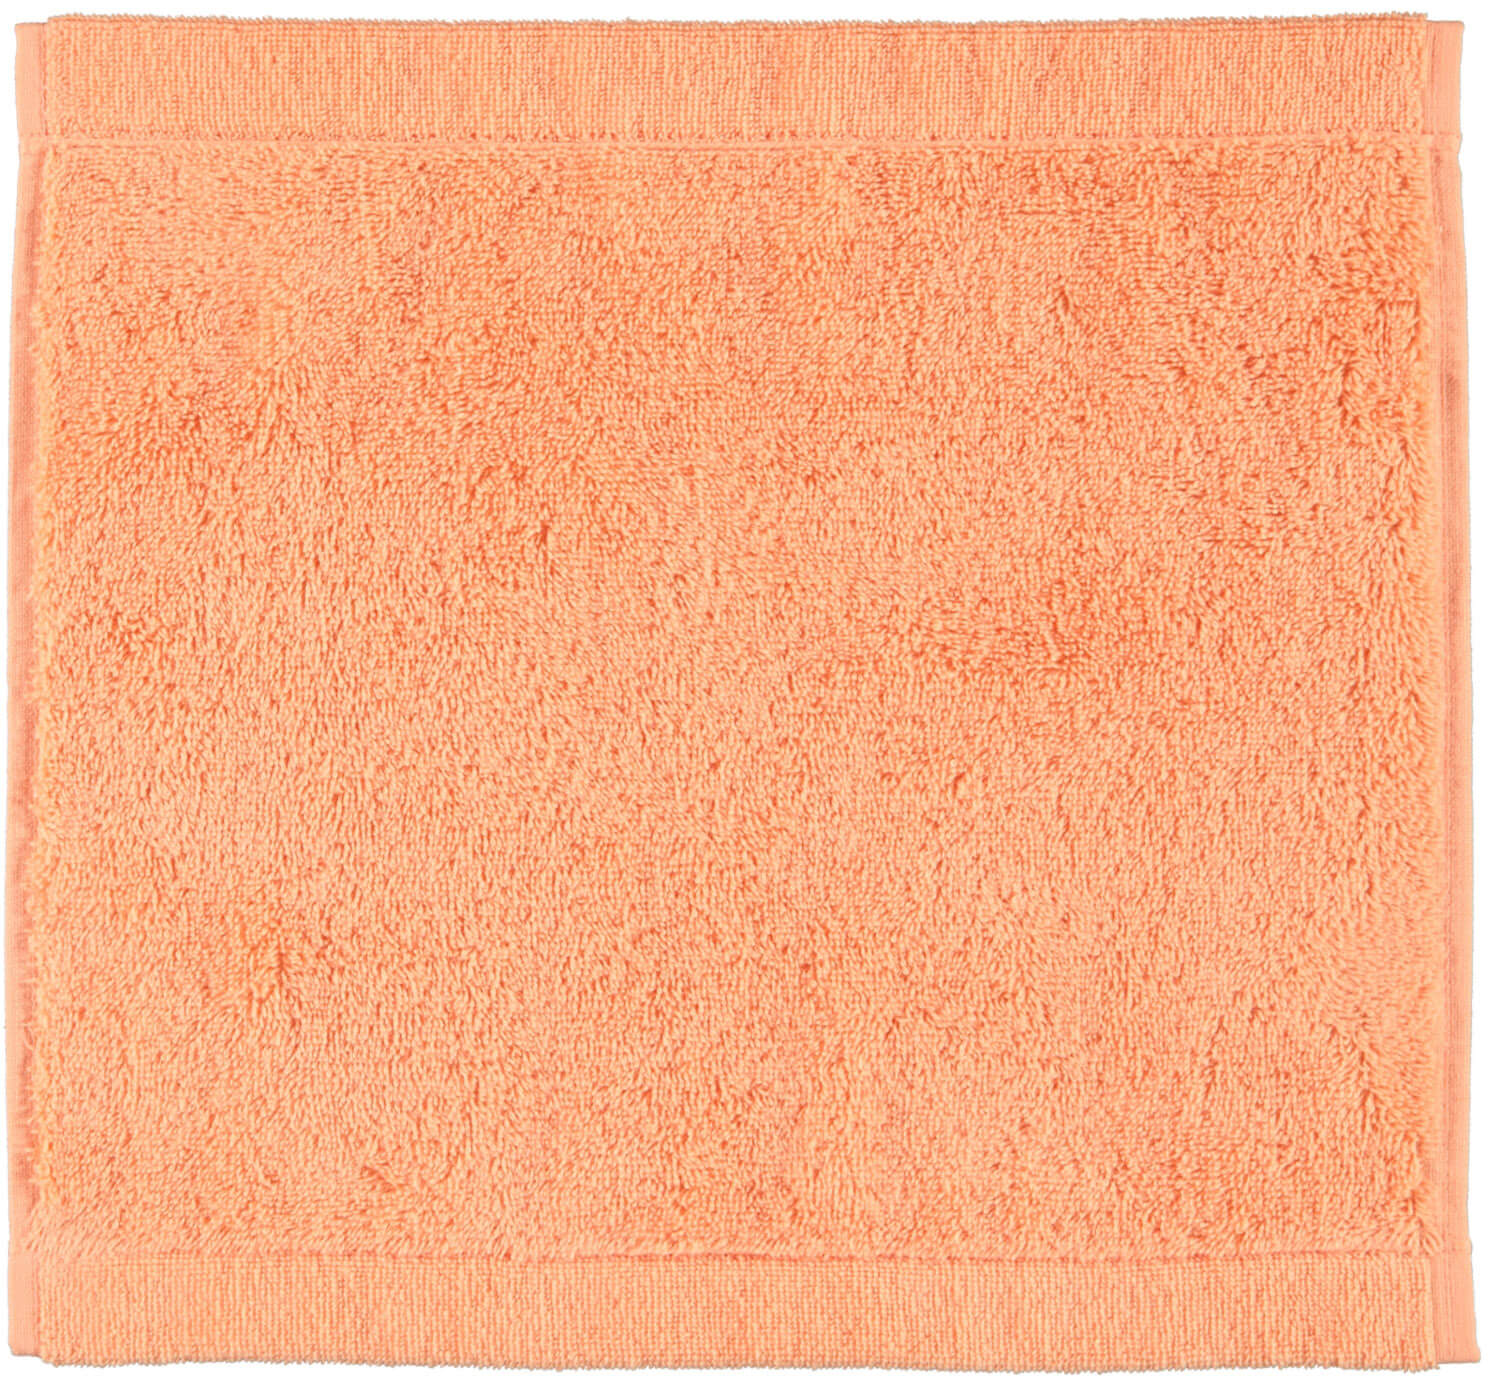 Однотонное полотенце Lifestyle Peach ☞ Размер: 70 x 140 см